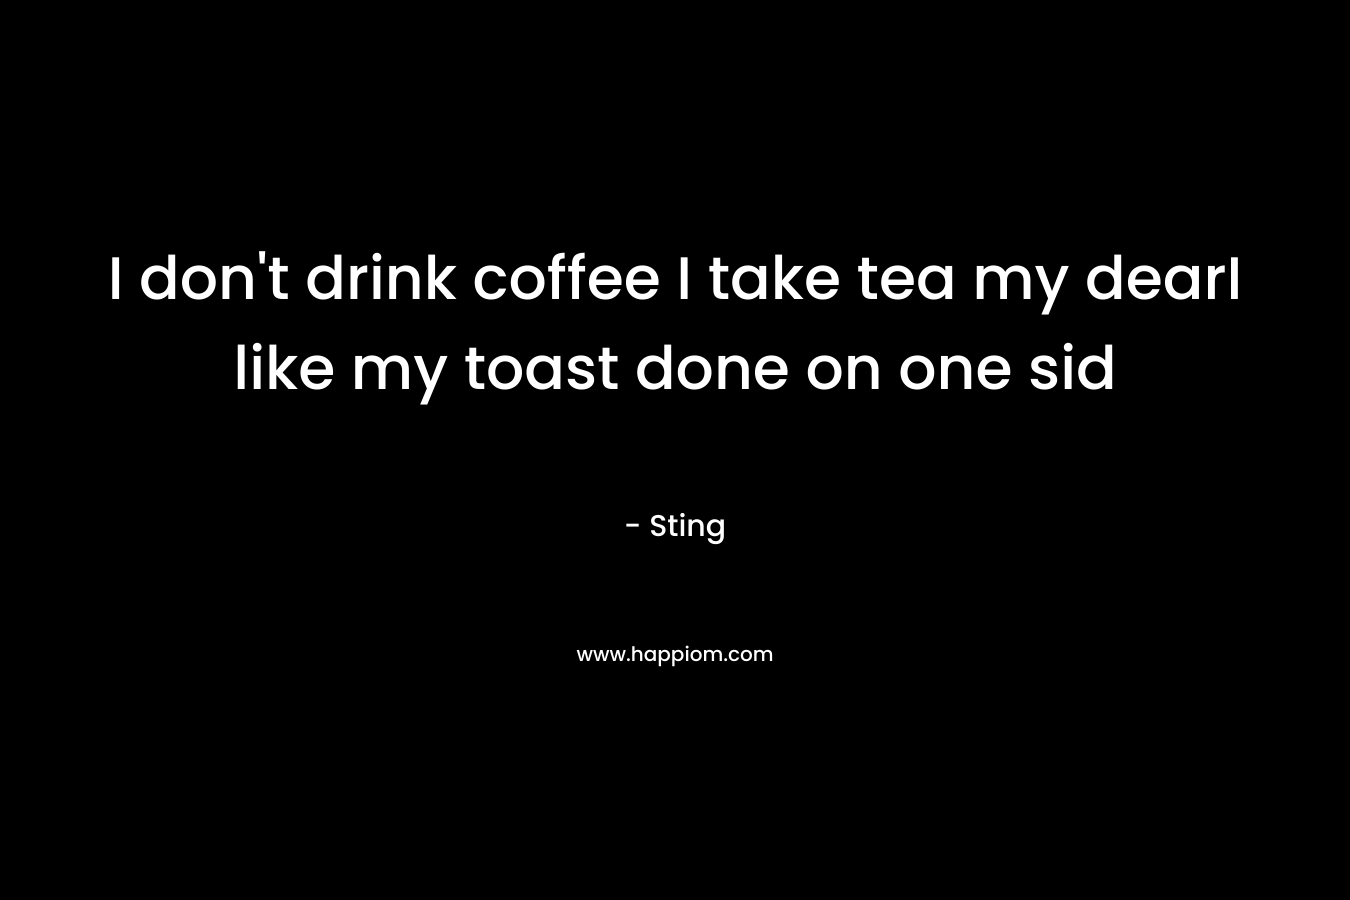 I don’t drink coffee I take tea my dearI like my toast done on one sid – Sting